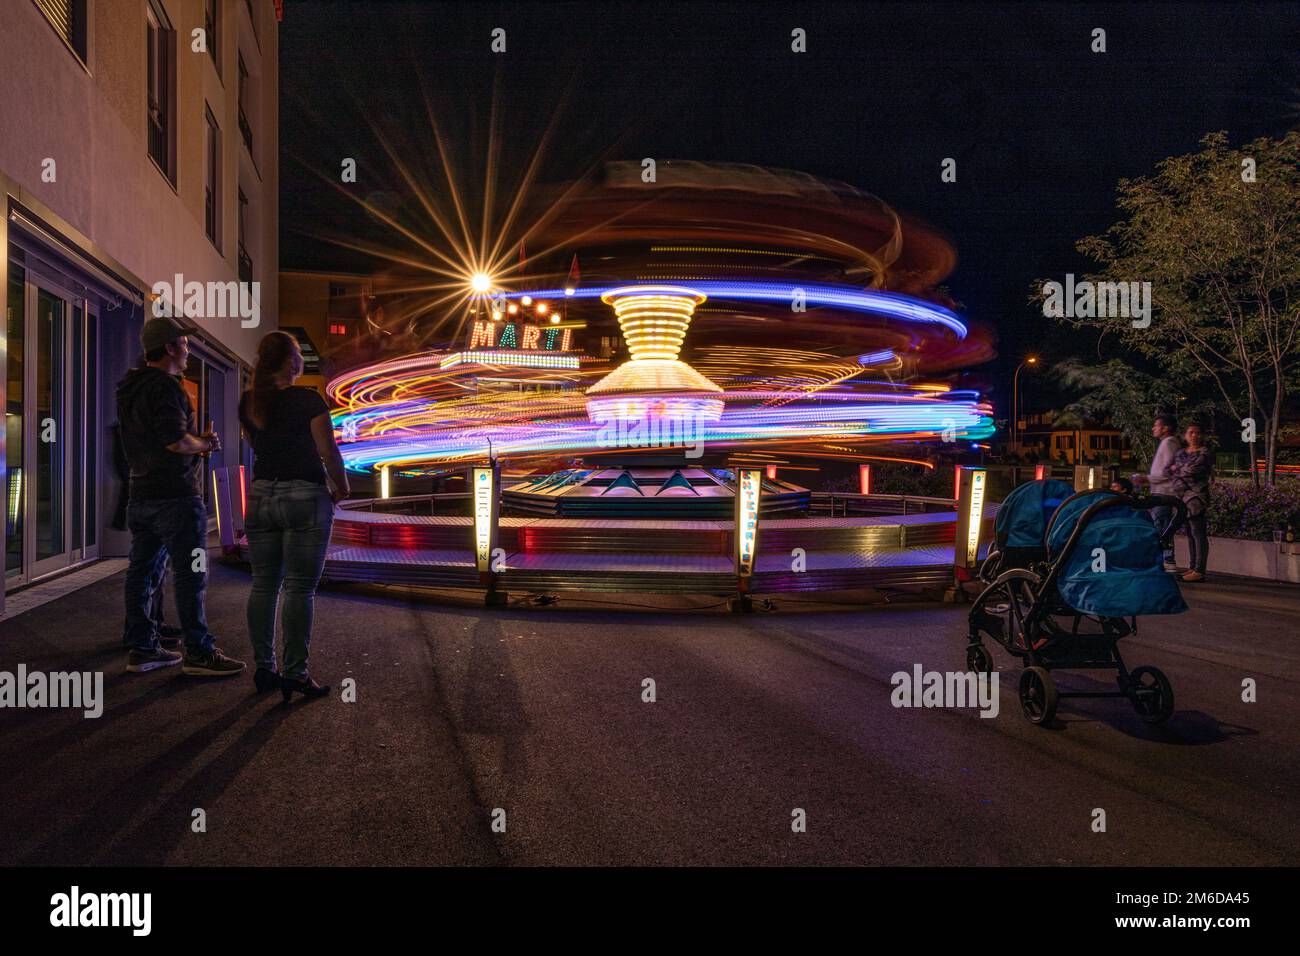 Carousel at the Kilbi, fair in Malters, Lucerne, Switzerland, Europe Stock Photo